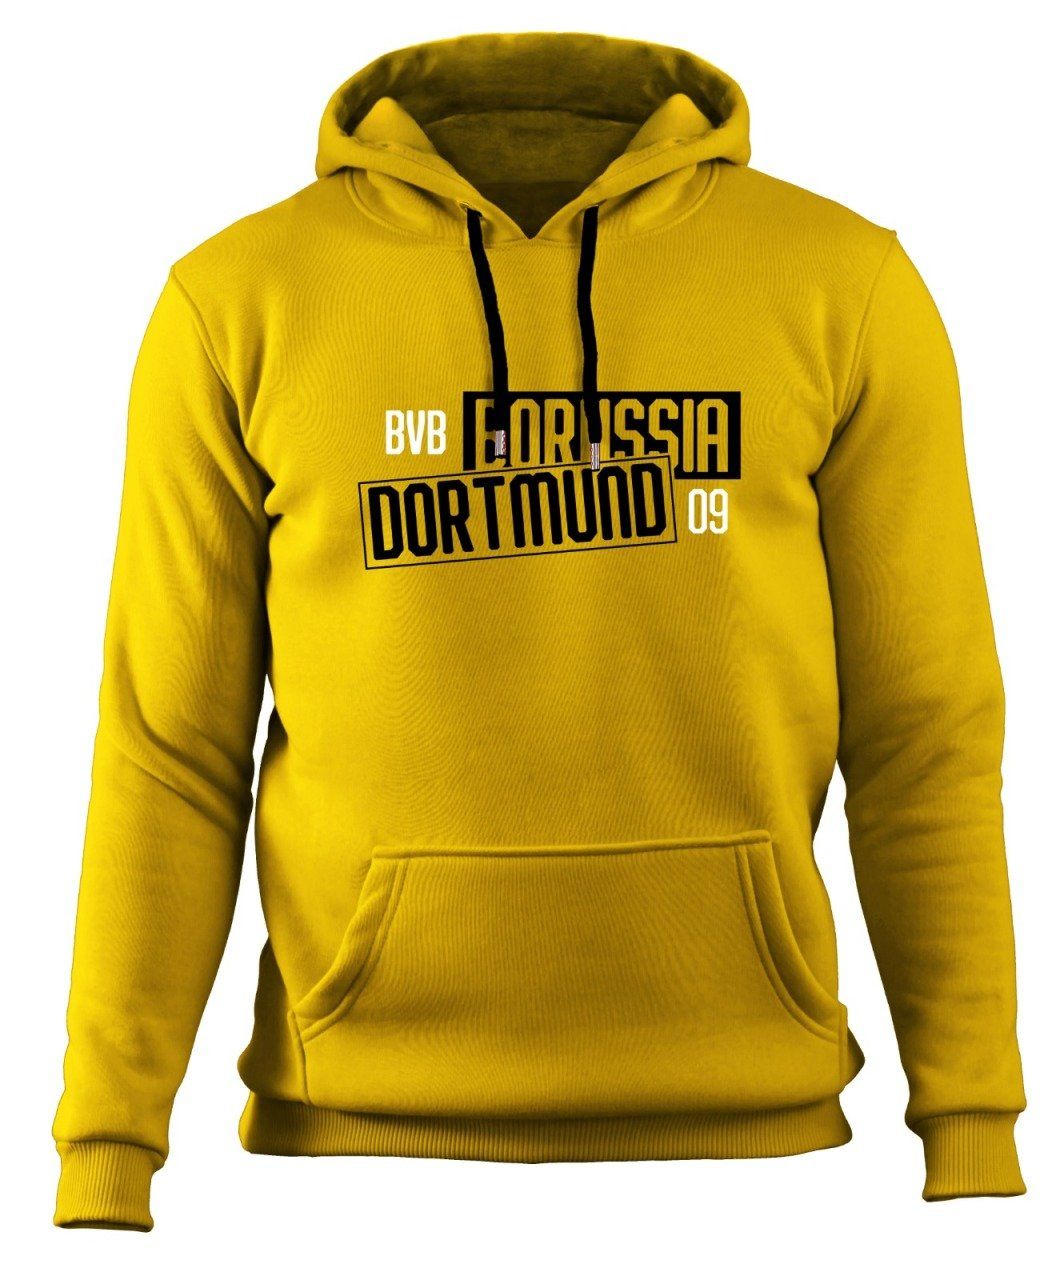 BVB Borussia Dortmund Sweatshirt